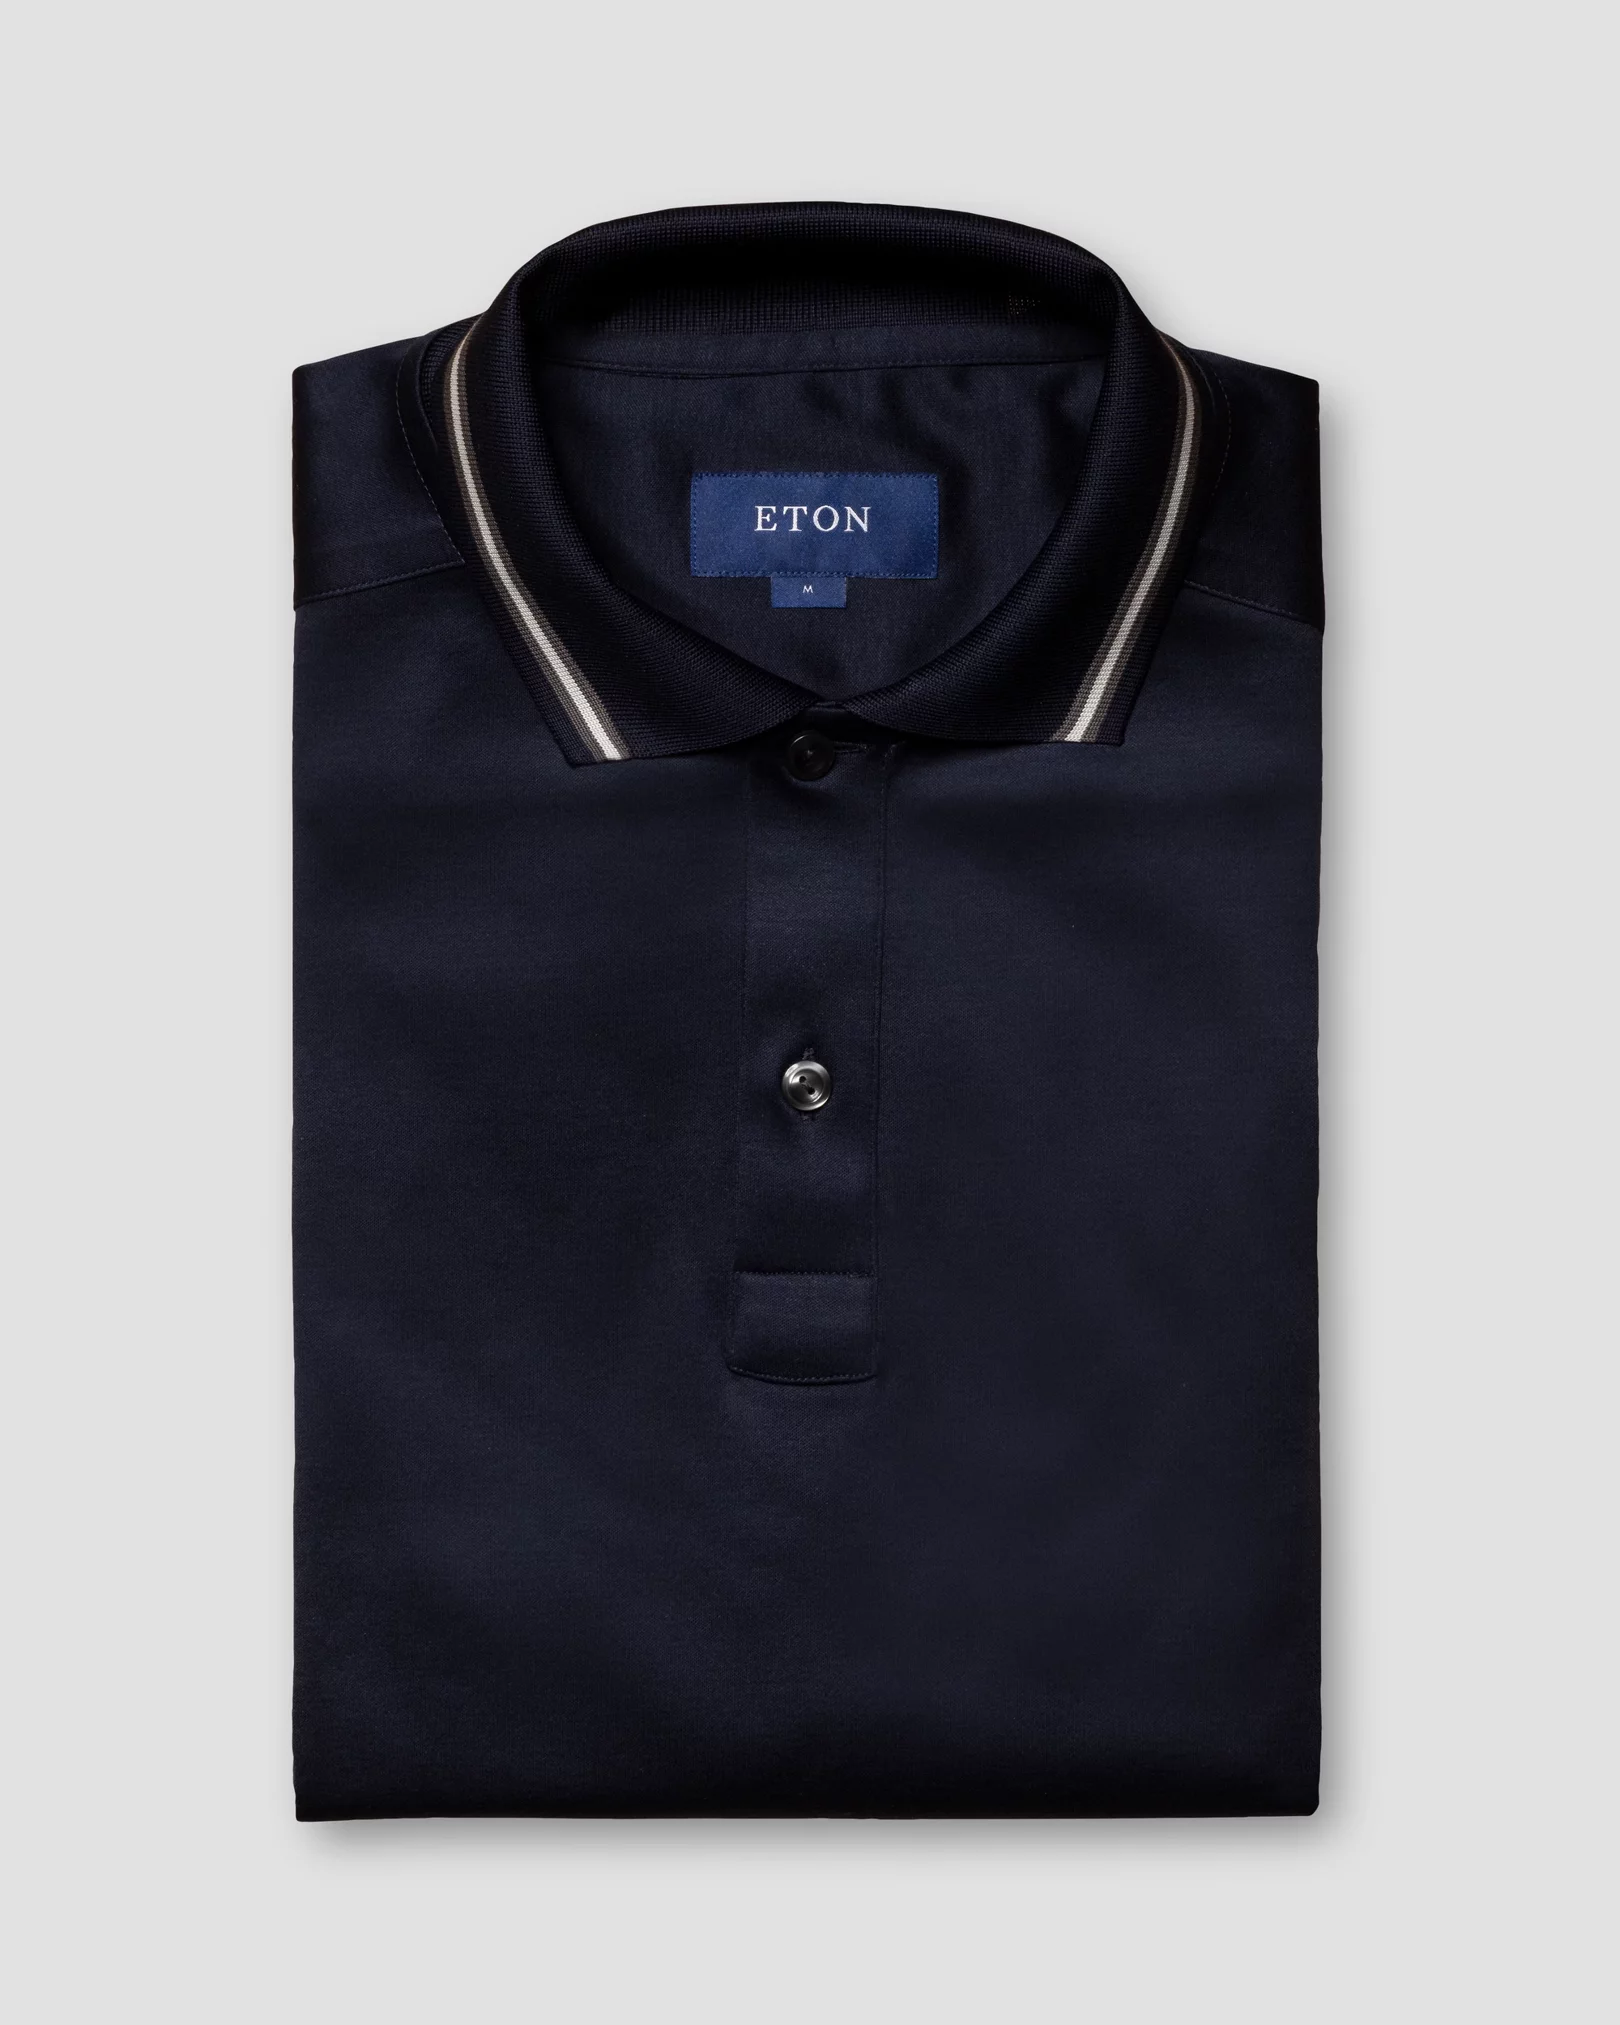 Eton - navy blue jersey knitted